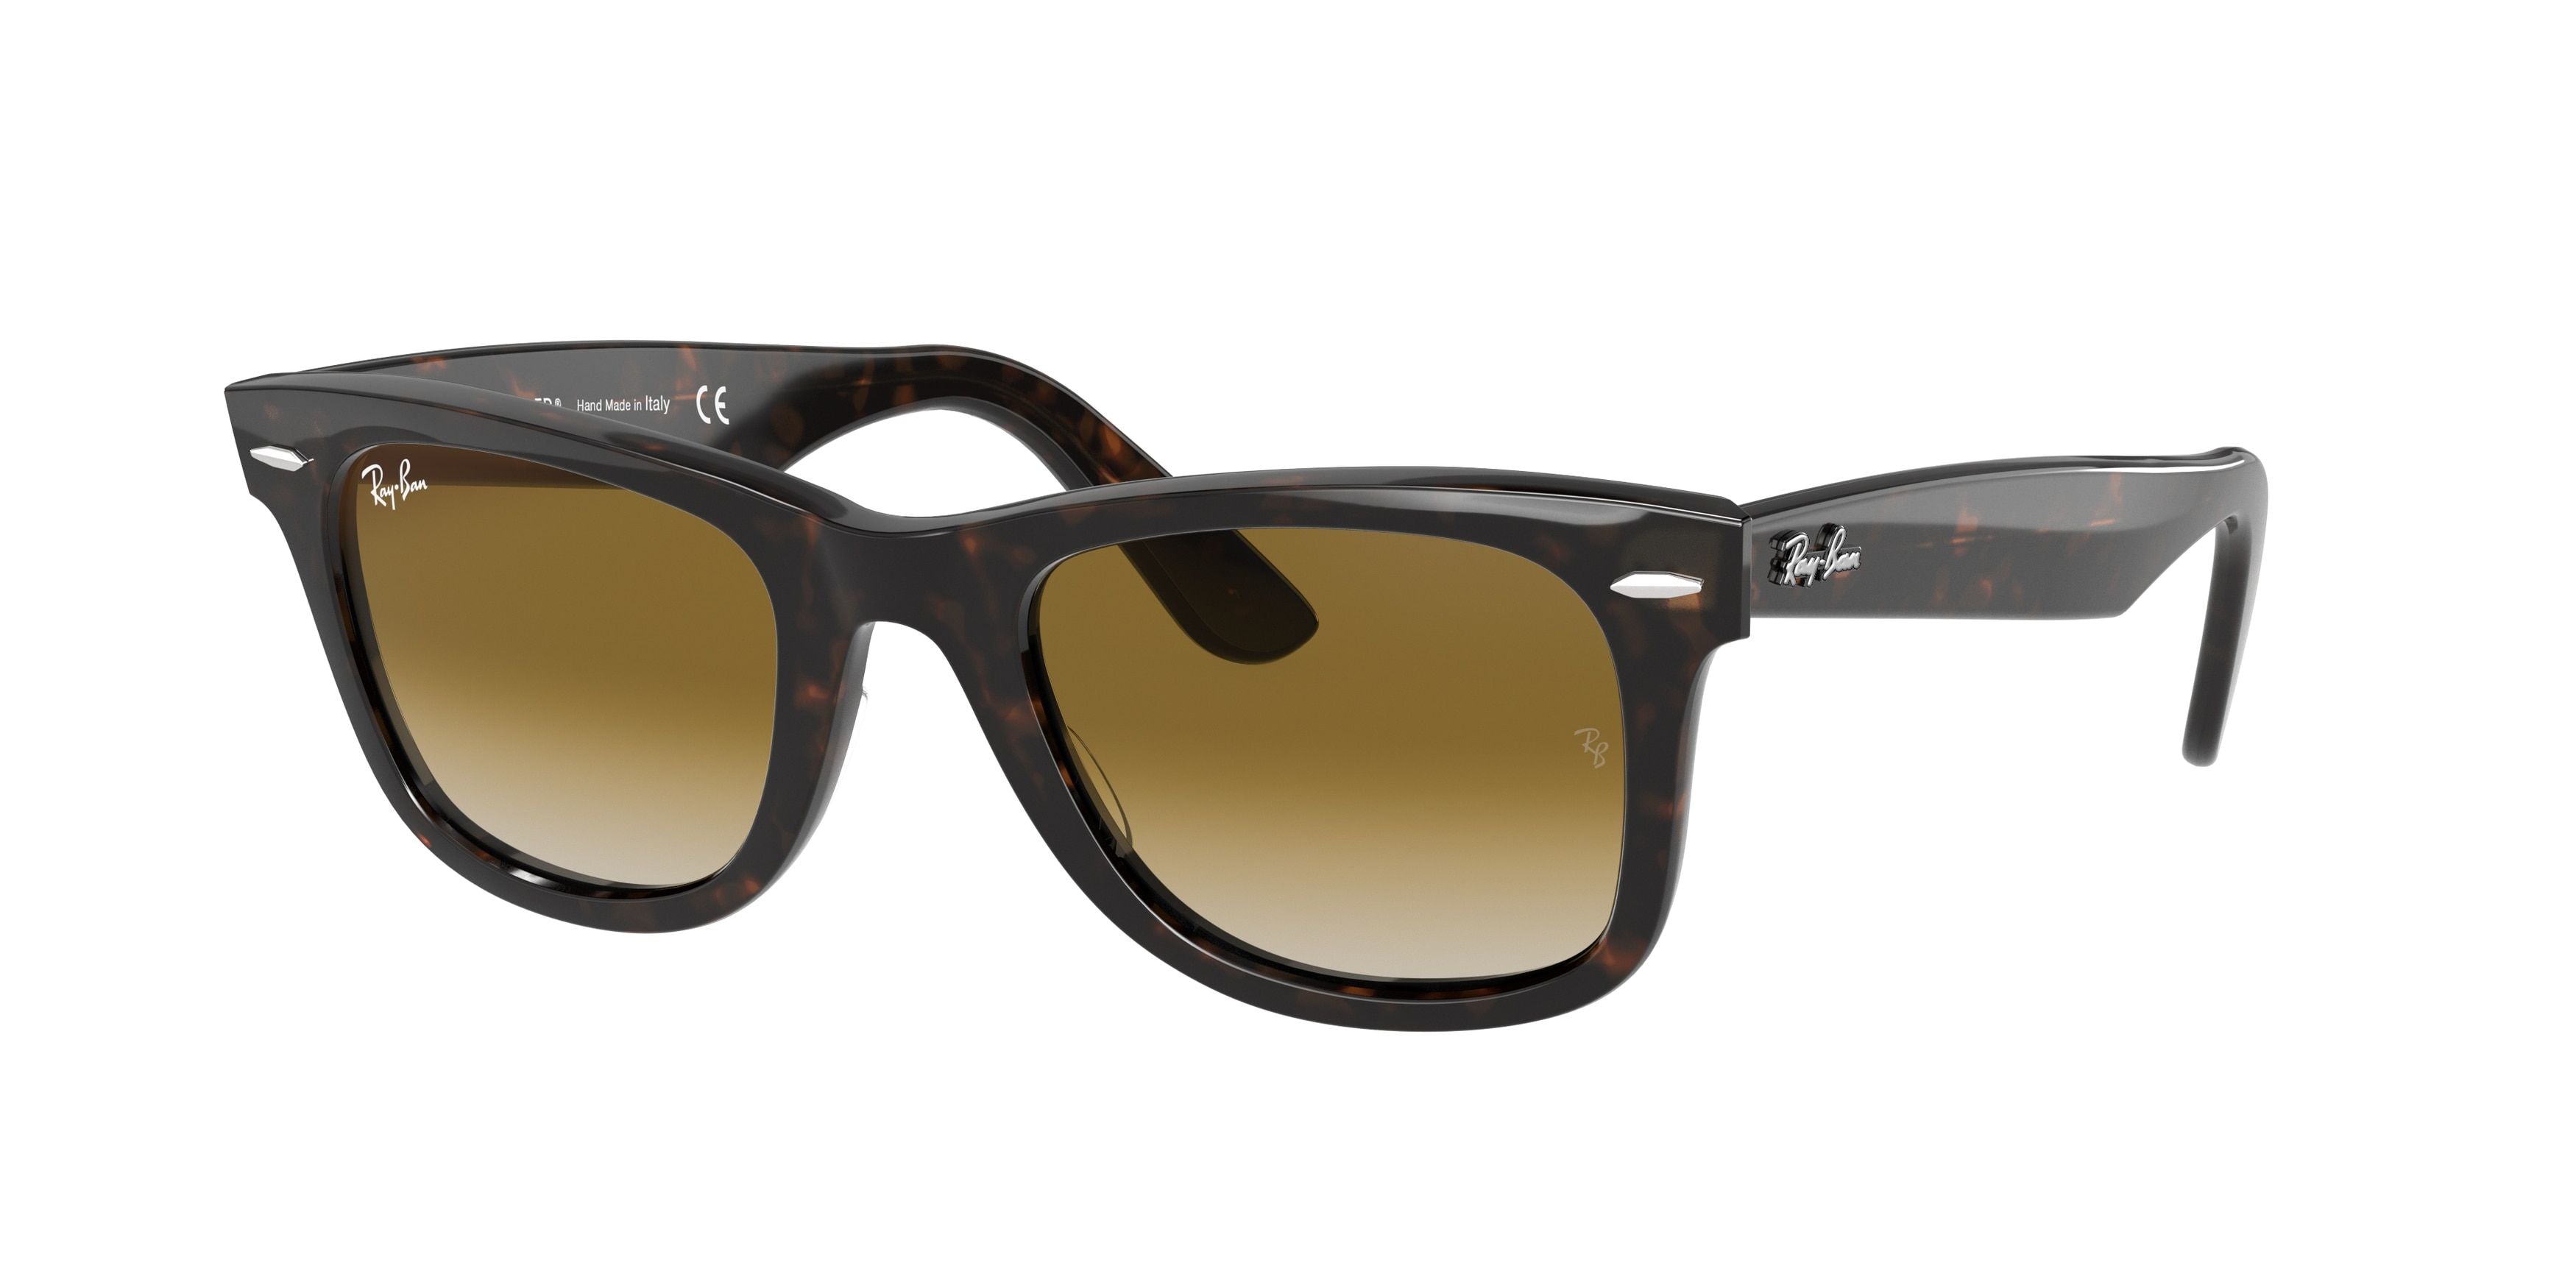 RAY-BAN Original Wayfarer Classic Sunglasses - Polished Tortoise - Brown Lens